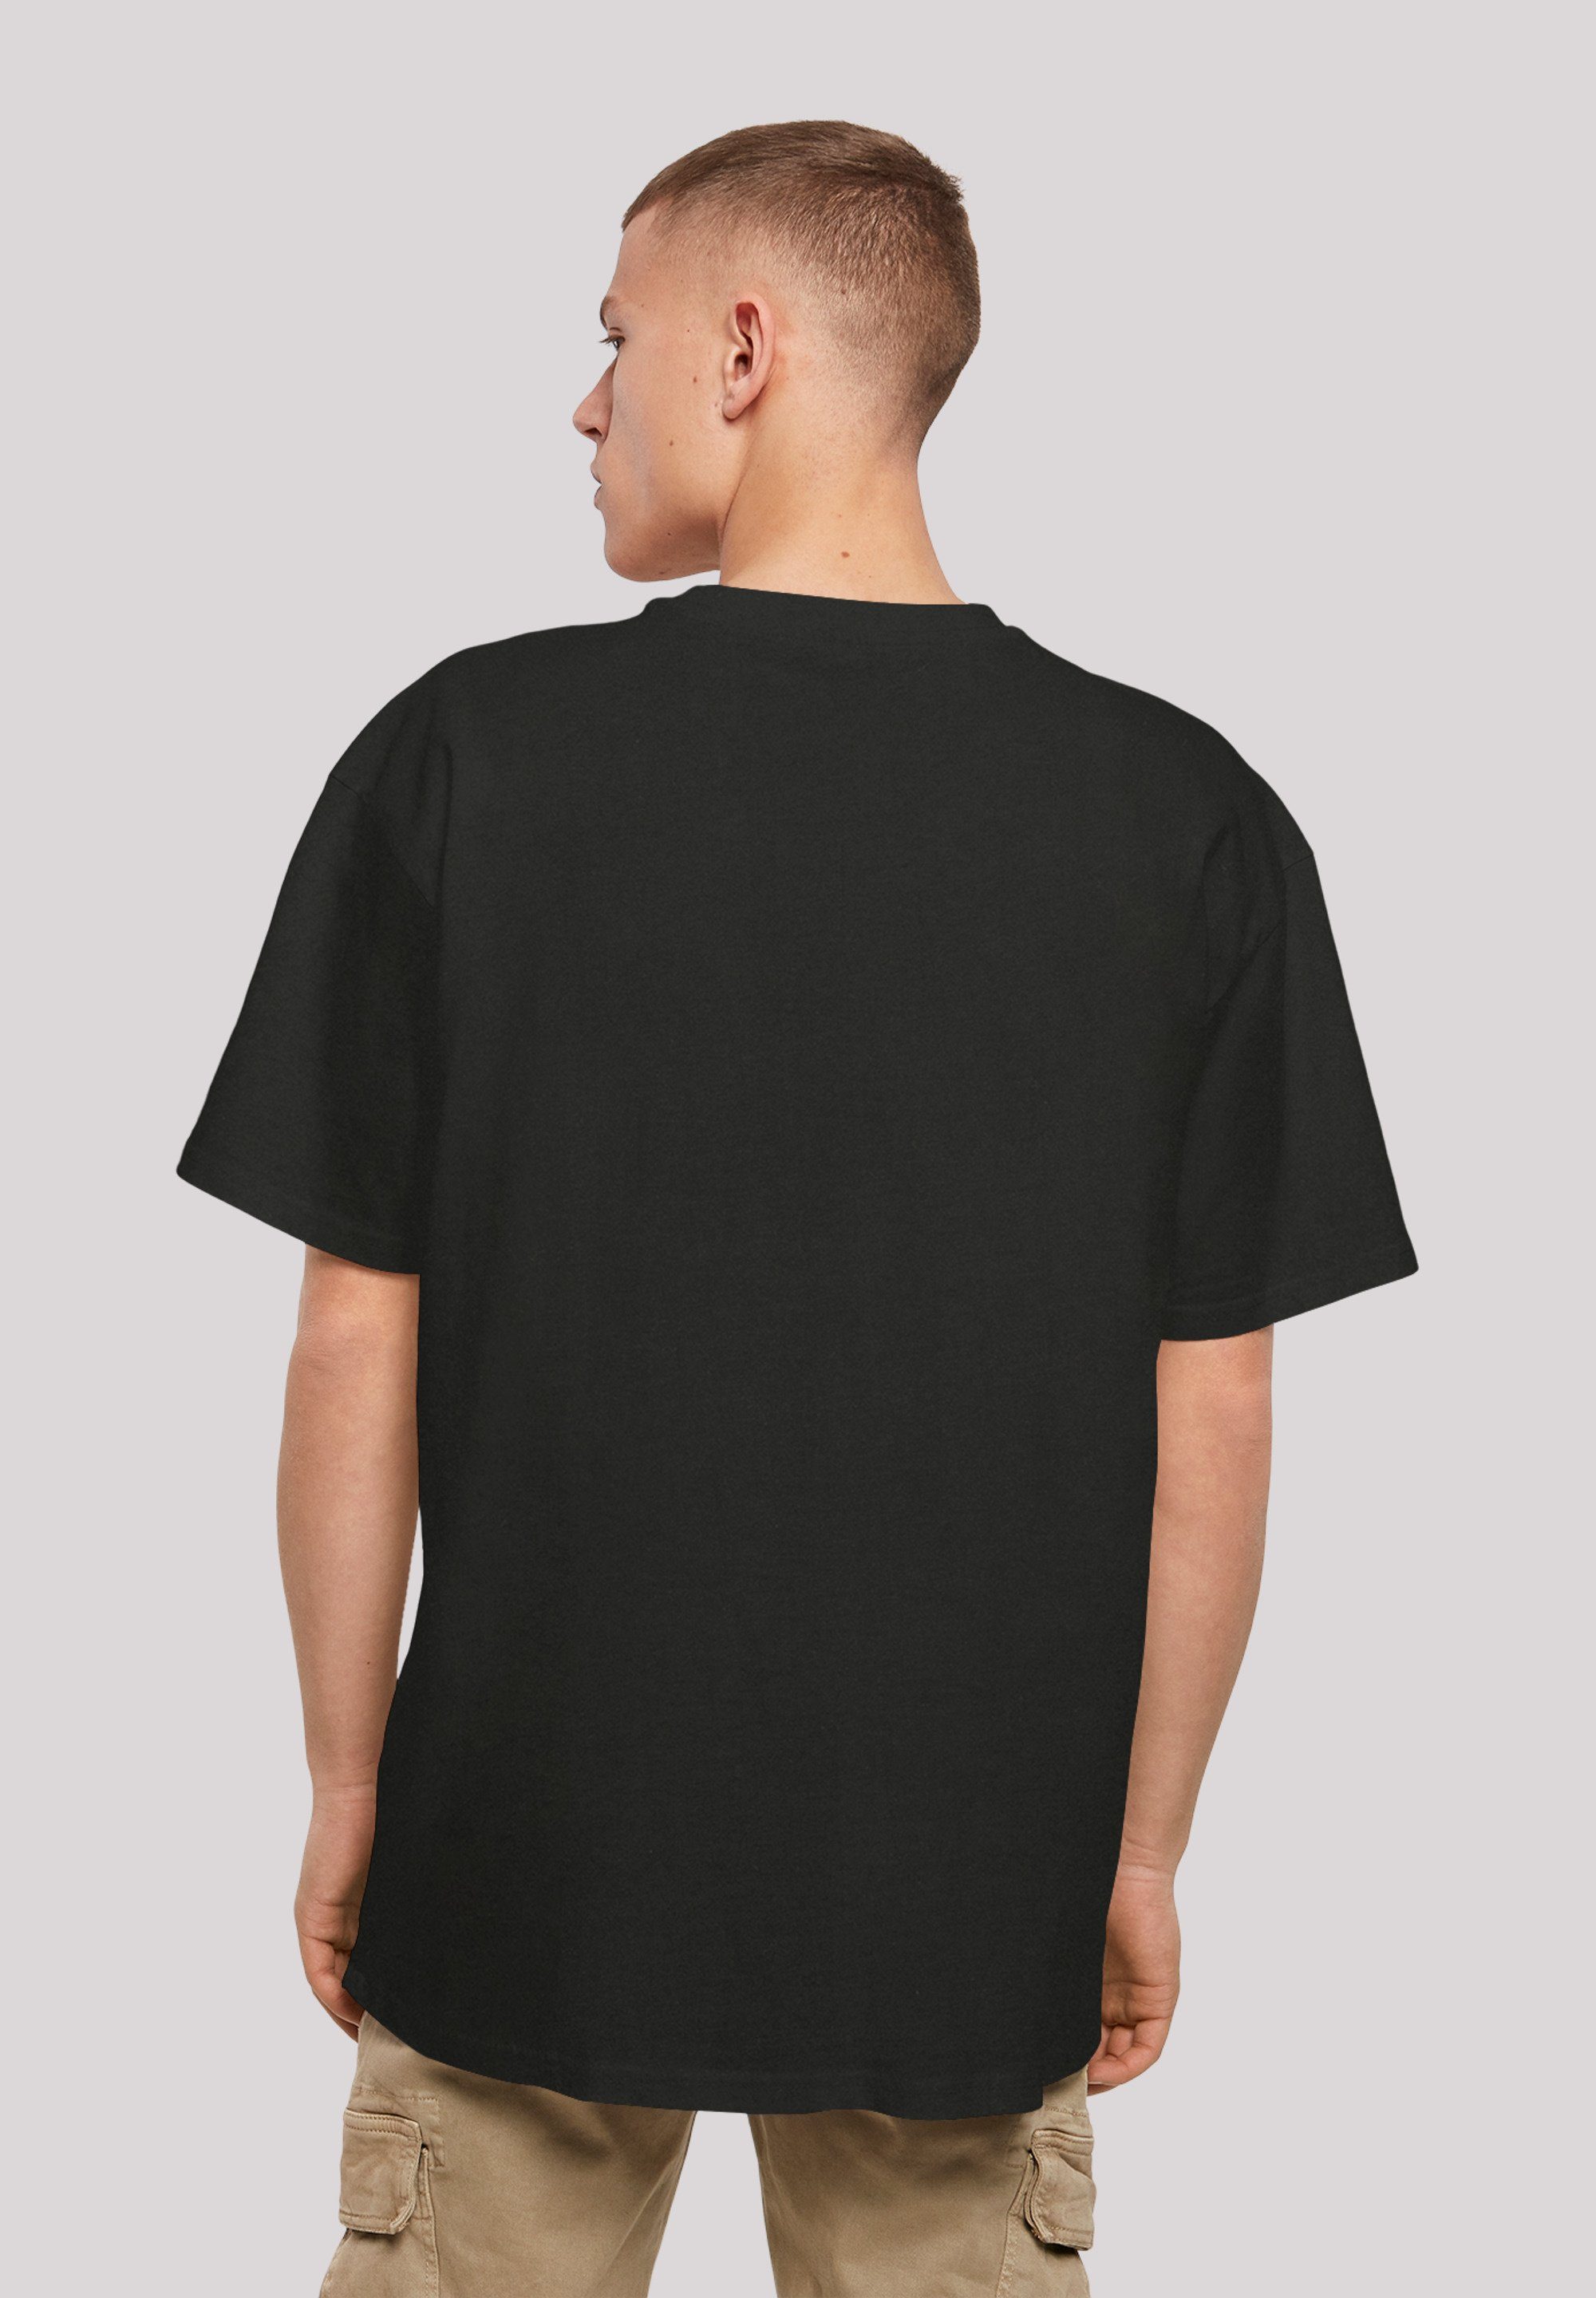 T-Shirt Print F4NT4STIC Nominal SpaceOne PHIBER schwarz